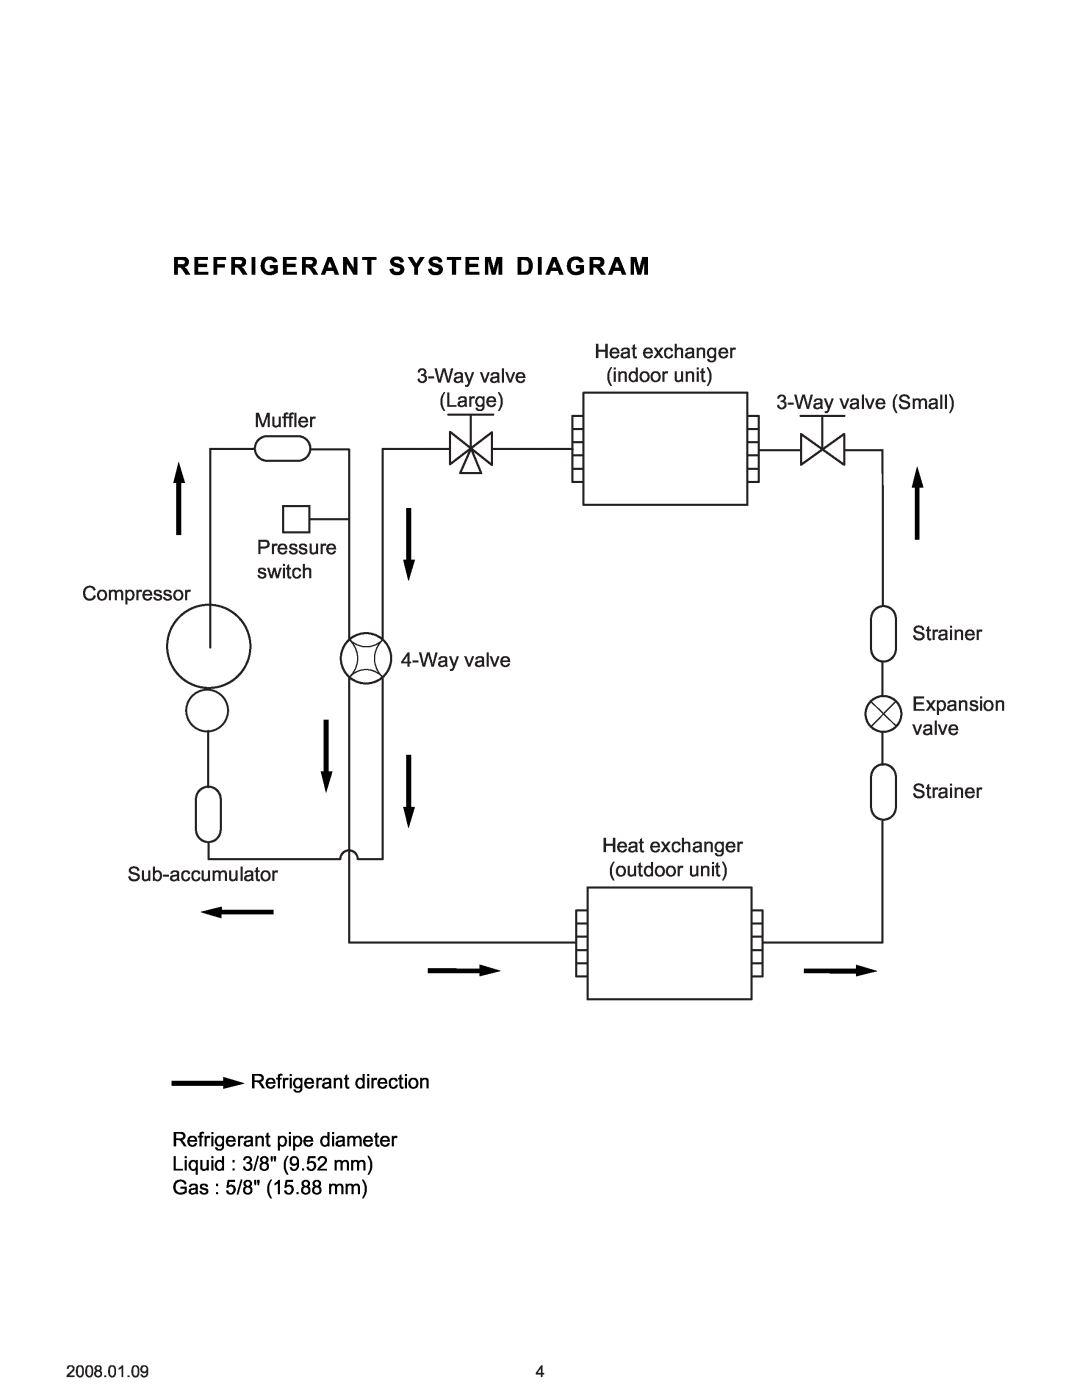 Friedrich MR36C3F, MW36C3F Refrigerant System Diagram, Compressor, Wayvalve Large Muffler Pressure switch, Sub-accumulator 